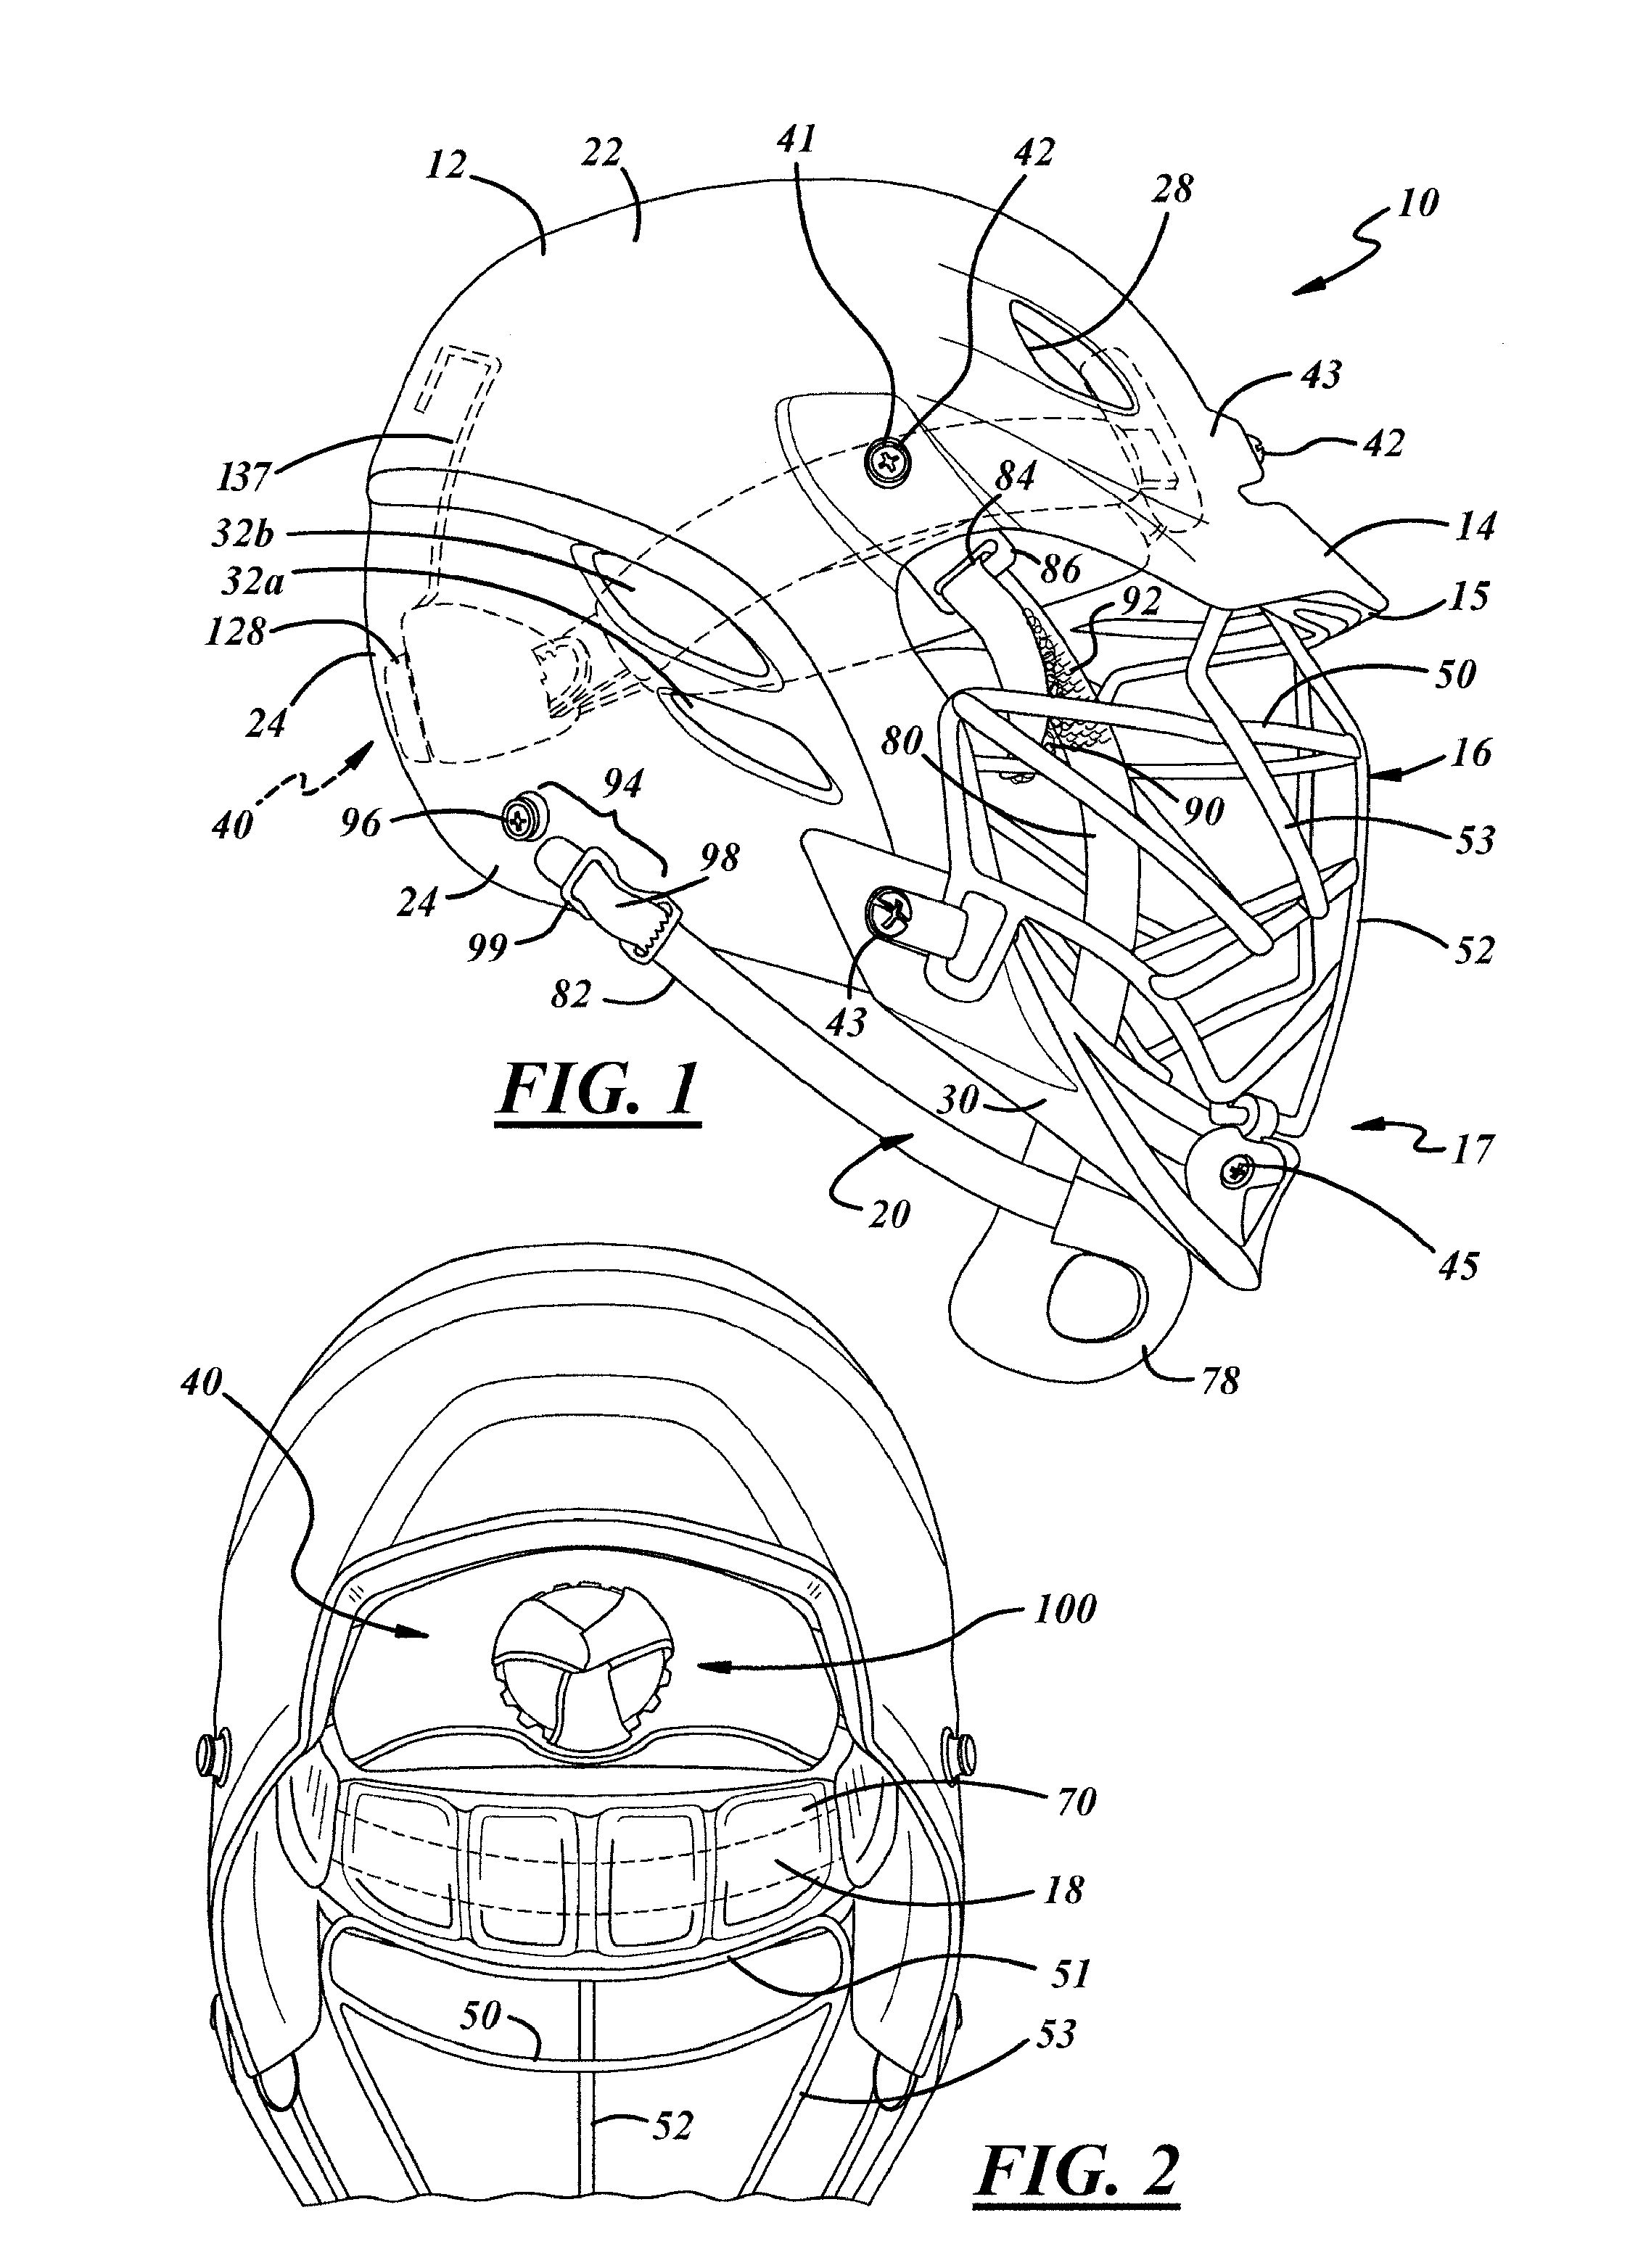 Helmet adjustment system